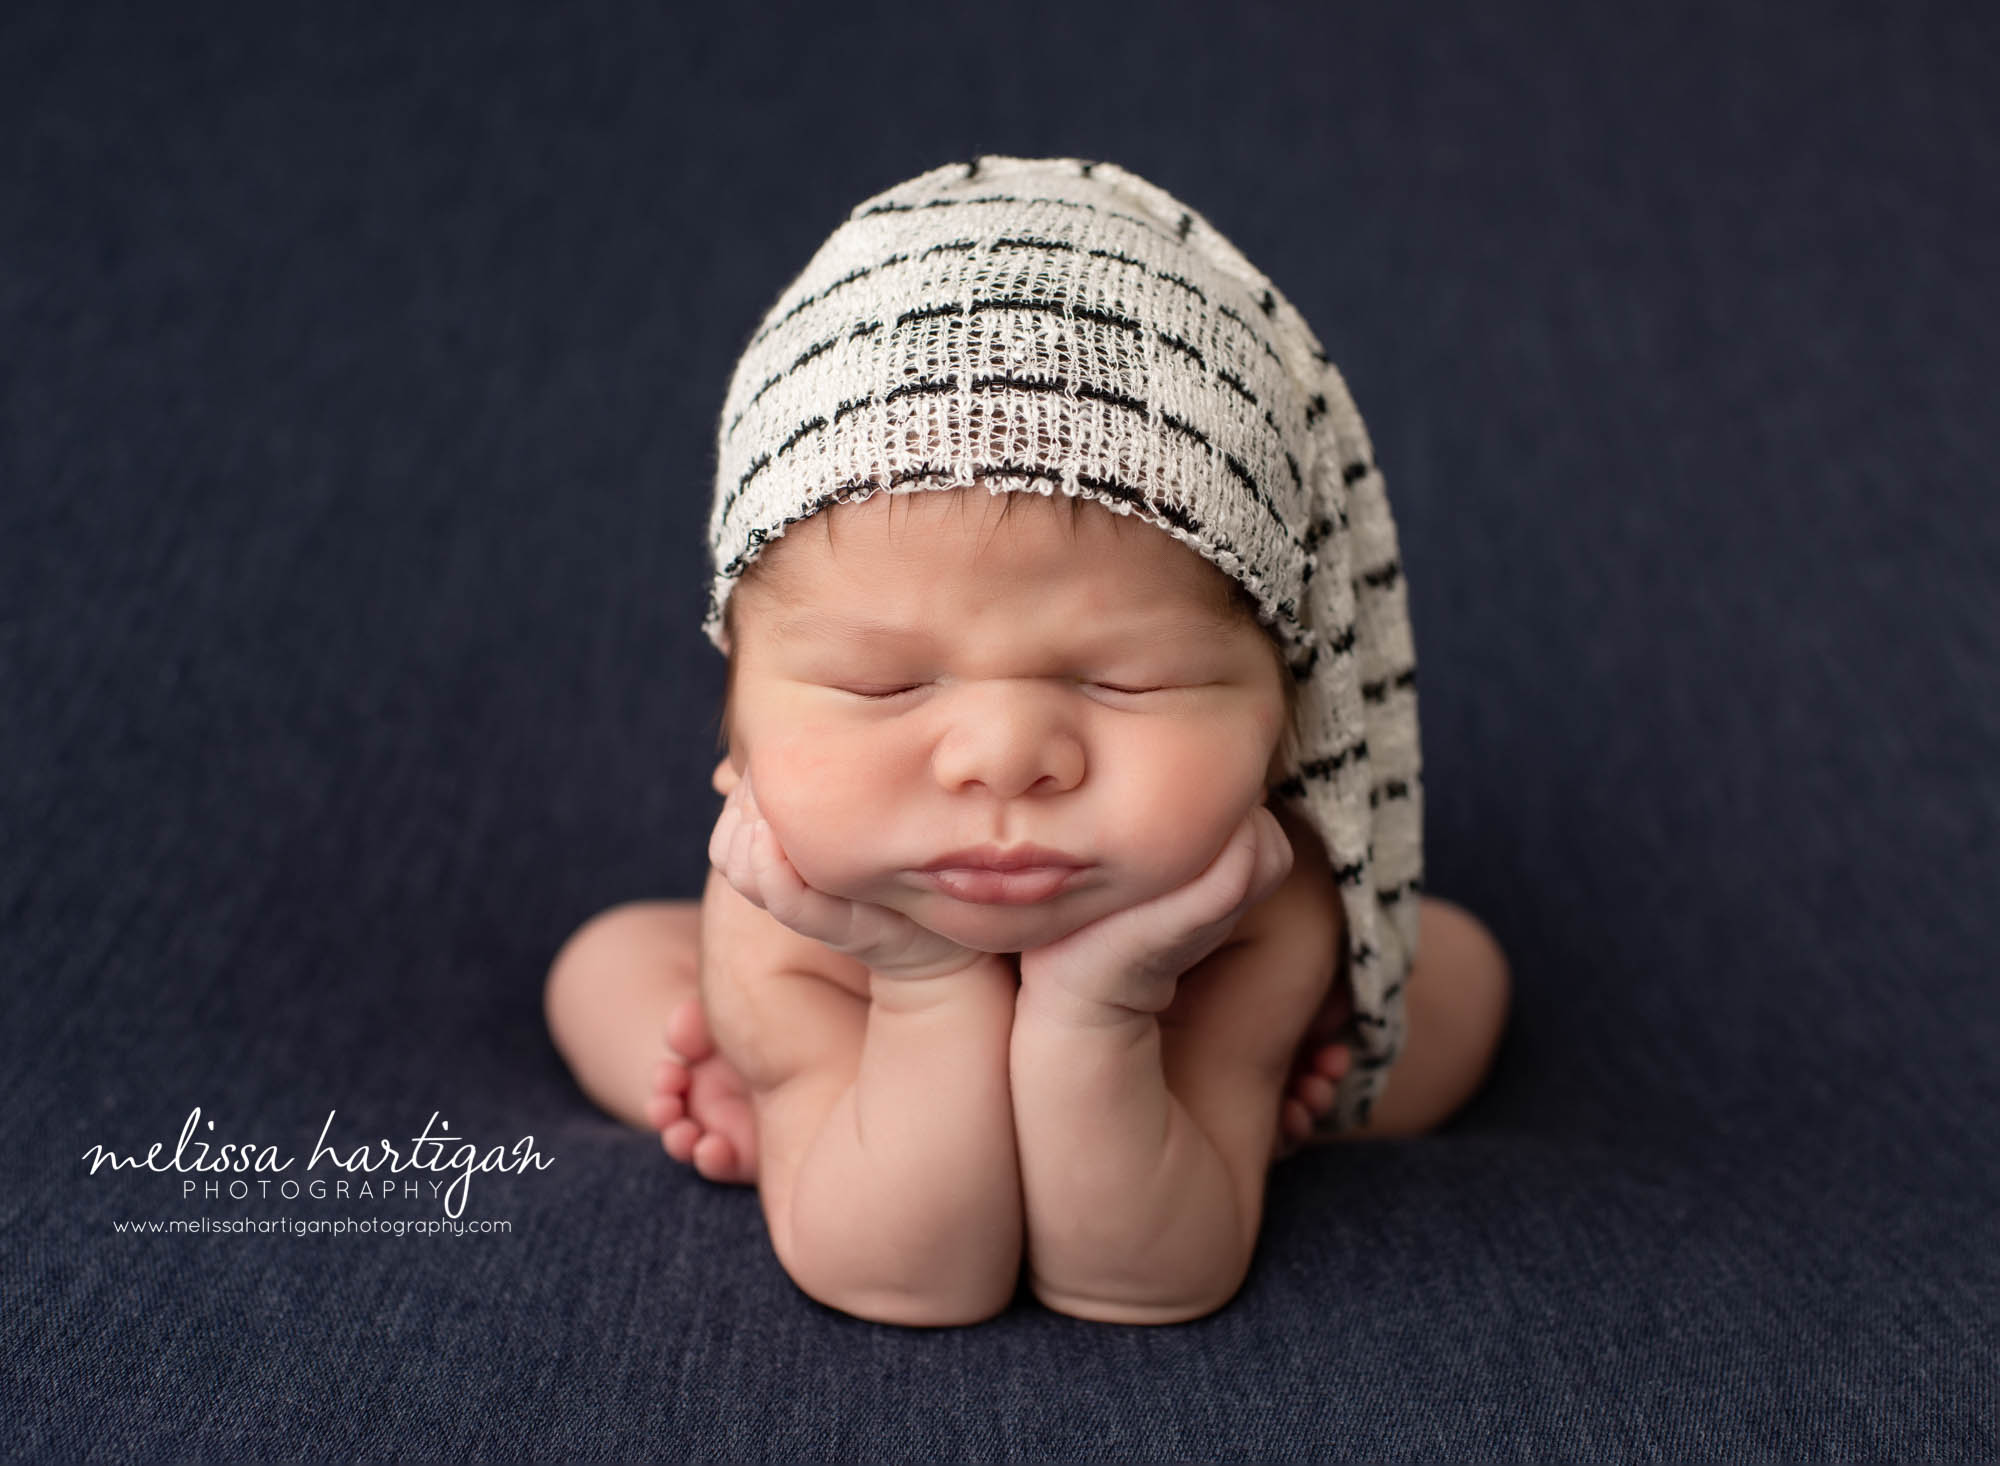 newborn baby boy wearing sleepy cap posed froggy pose vernon CT baby photography